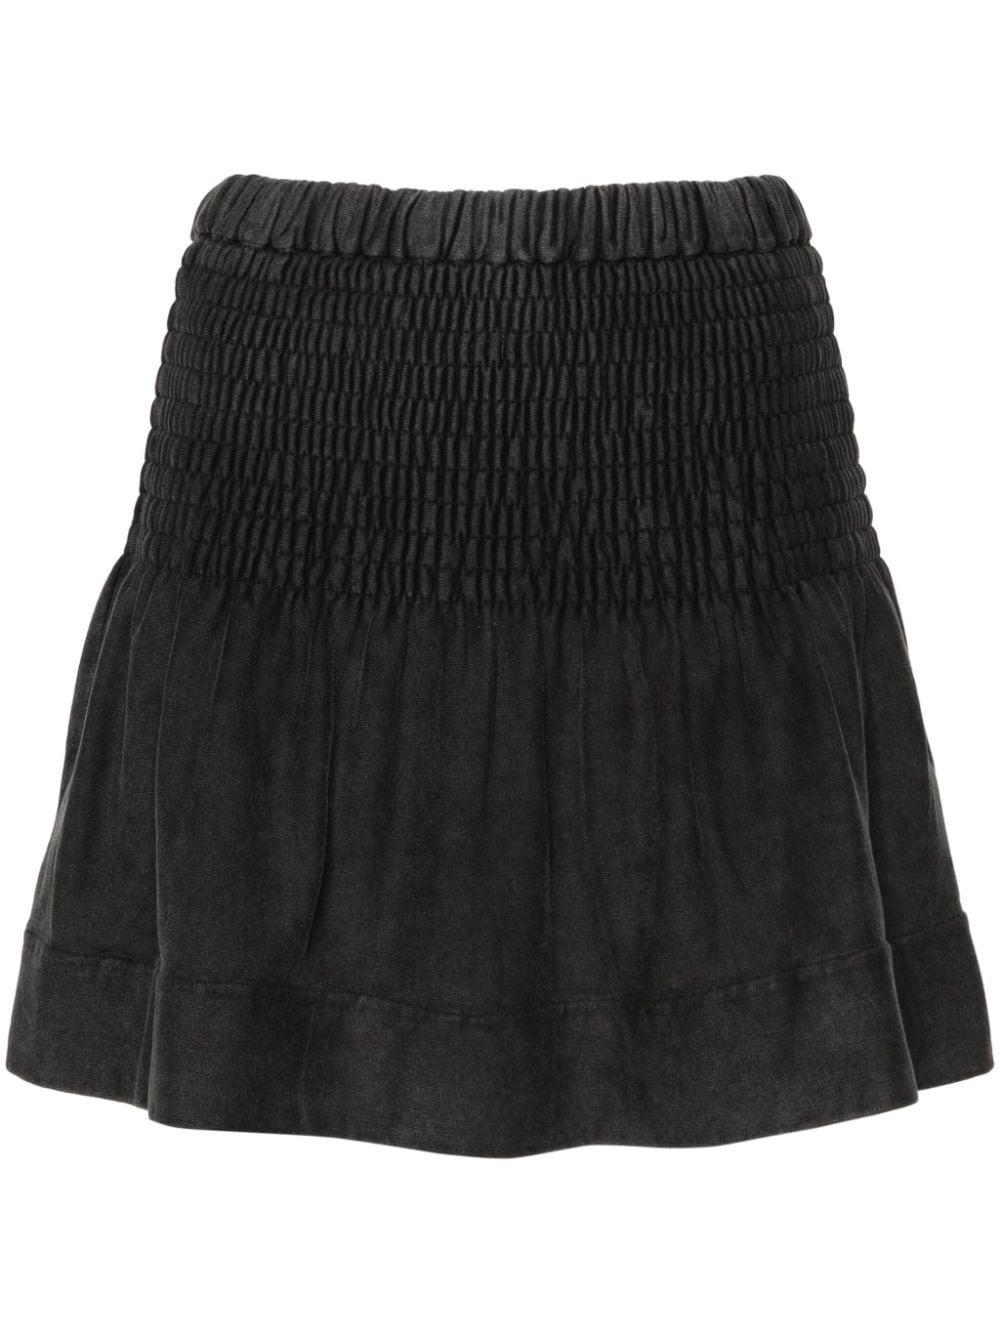 MARANT ÉTOILE Pacifica shirred miniskirt - Black von MARANT ÉTOILE